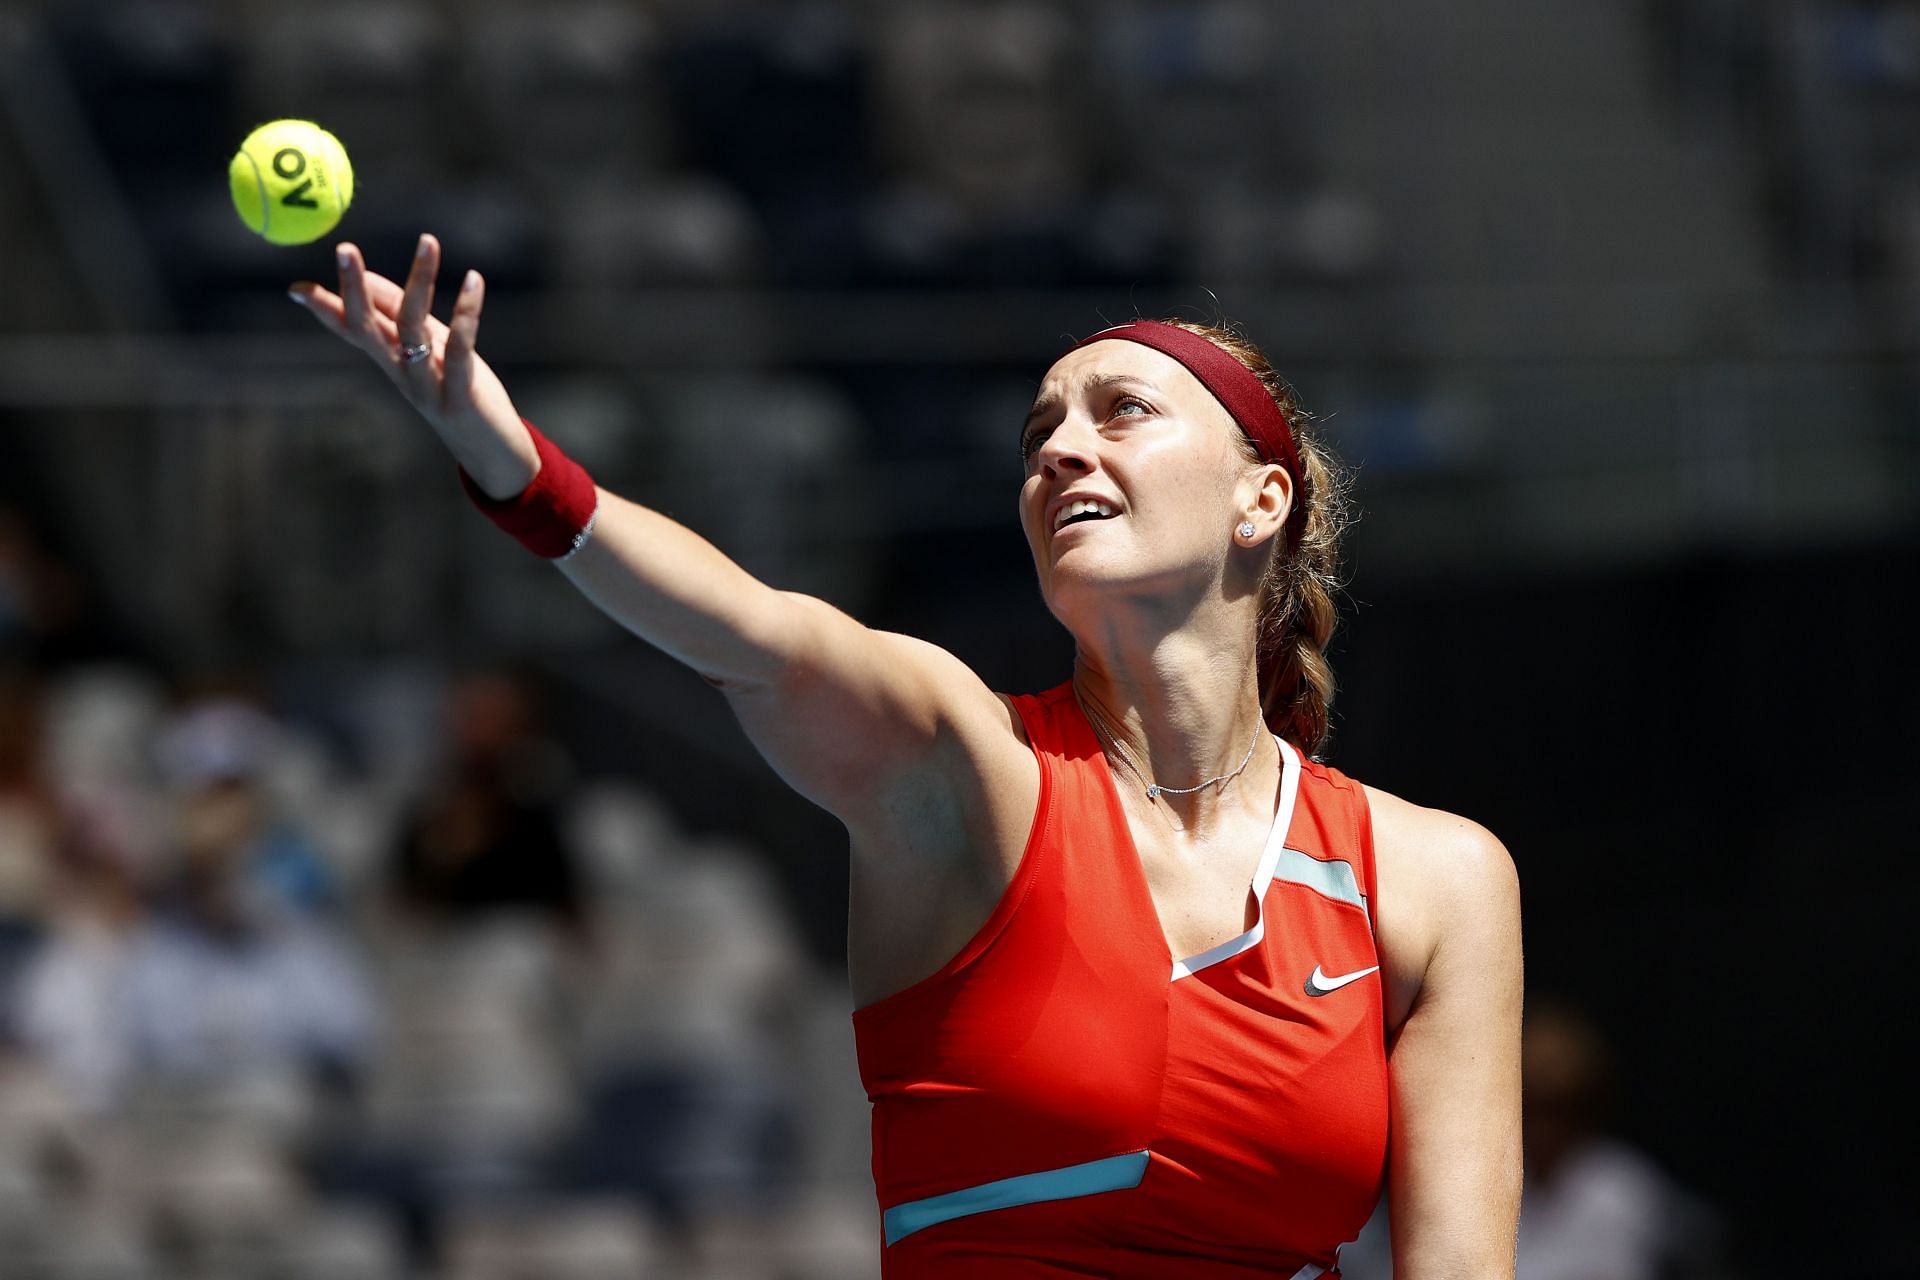 Kvitova serving at 2022 Australian Open.